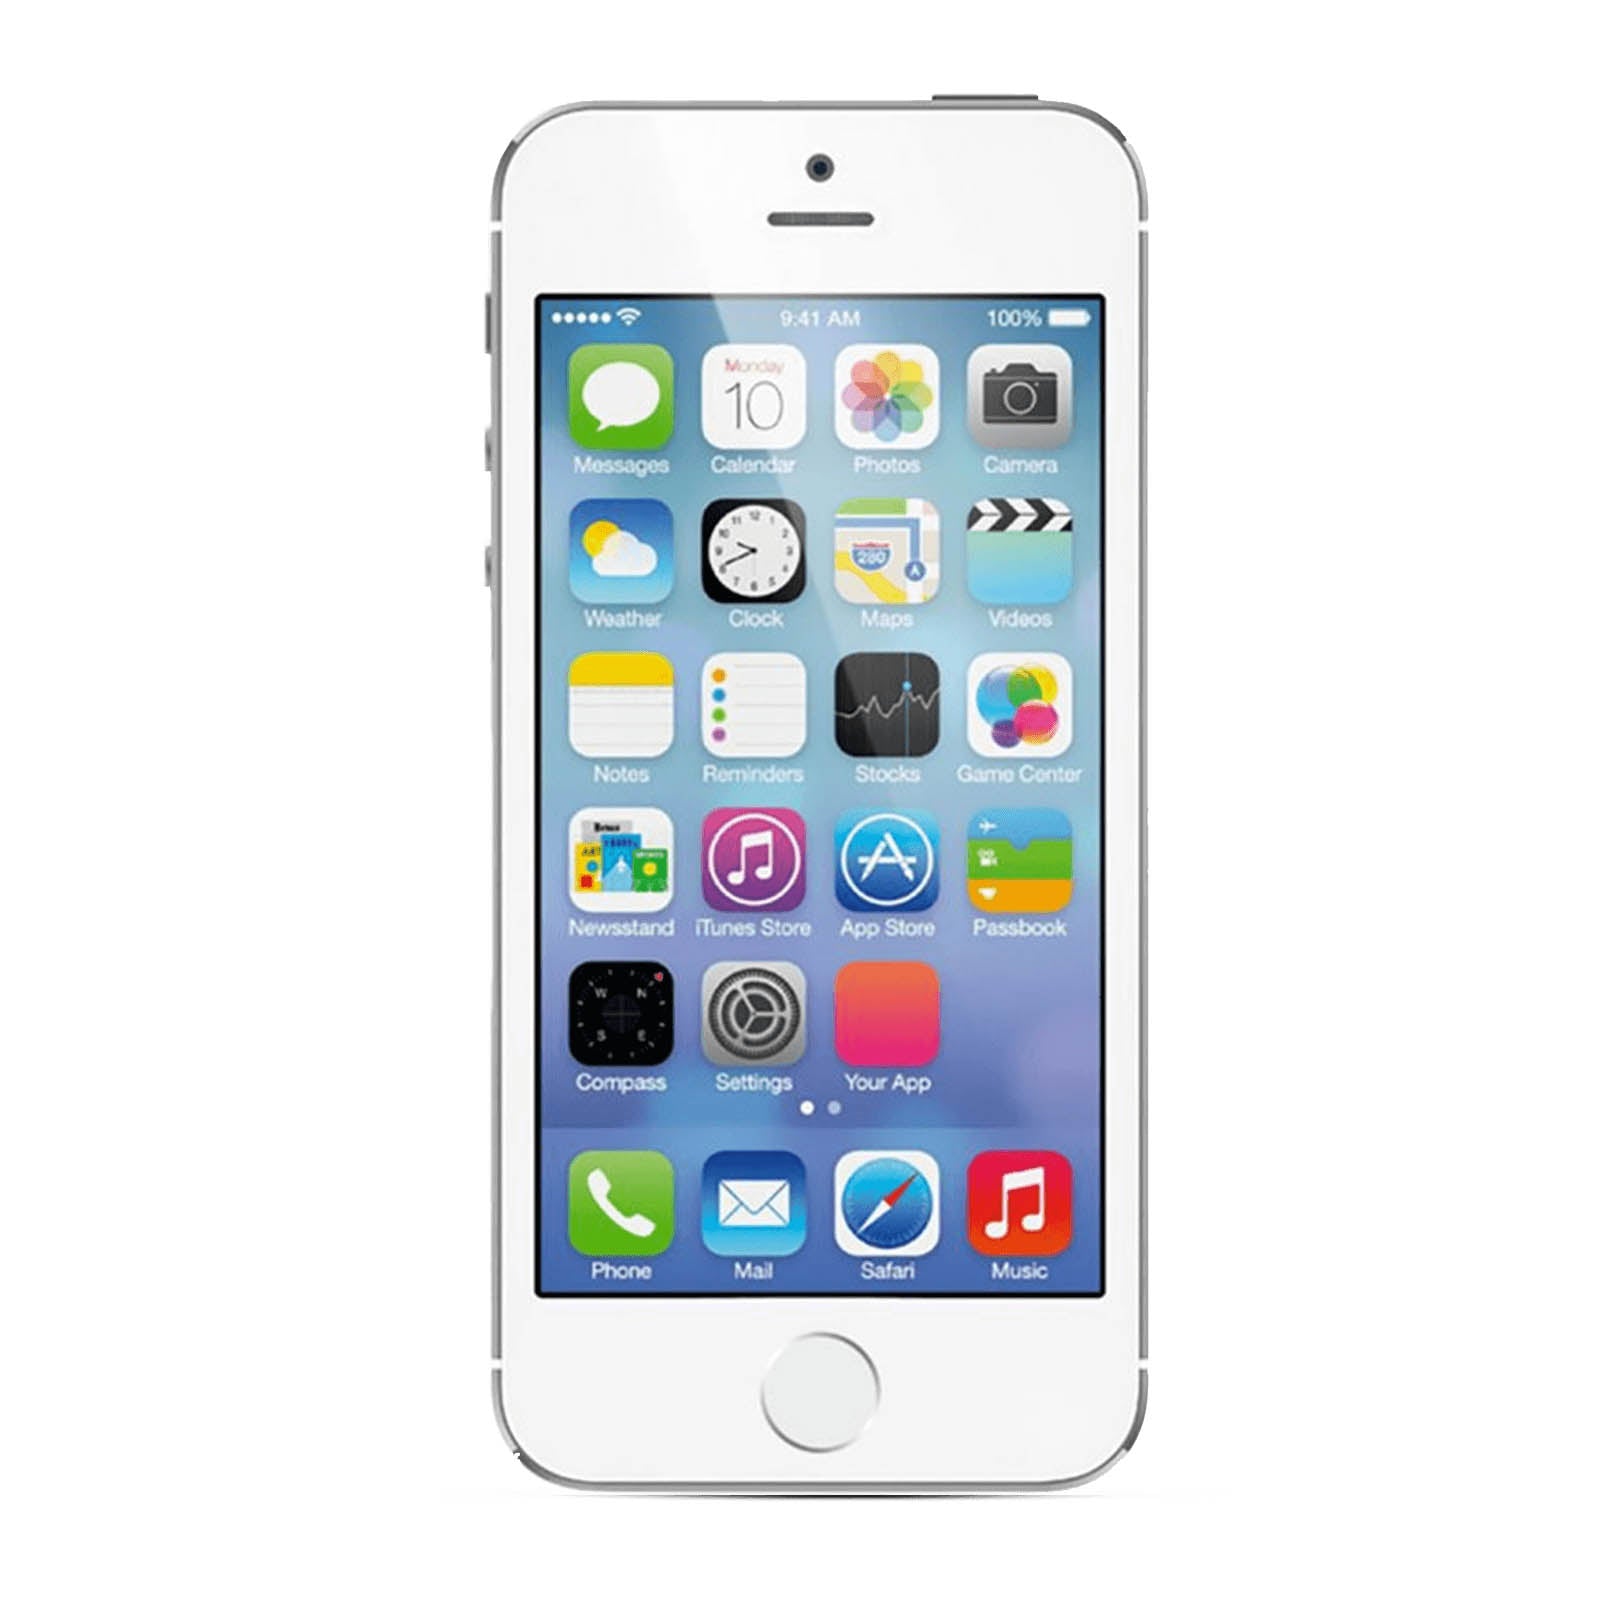 Apple iPhone SE 64GB Silver Good - Unlocked